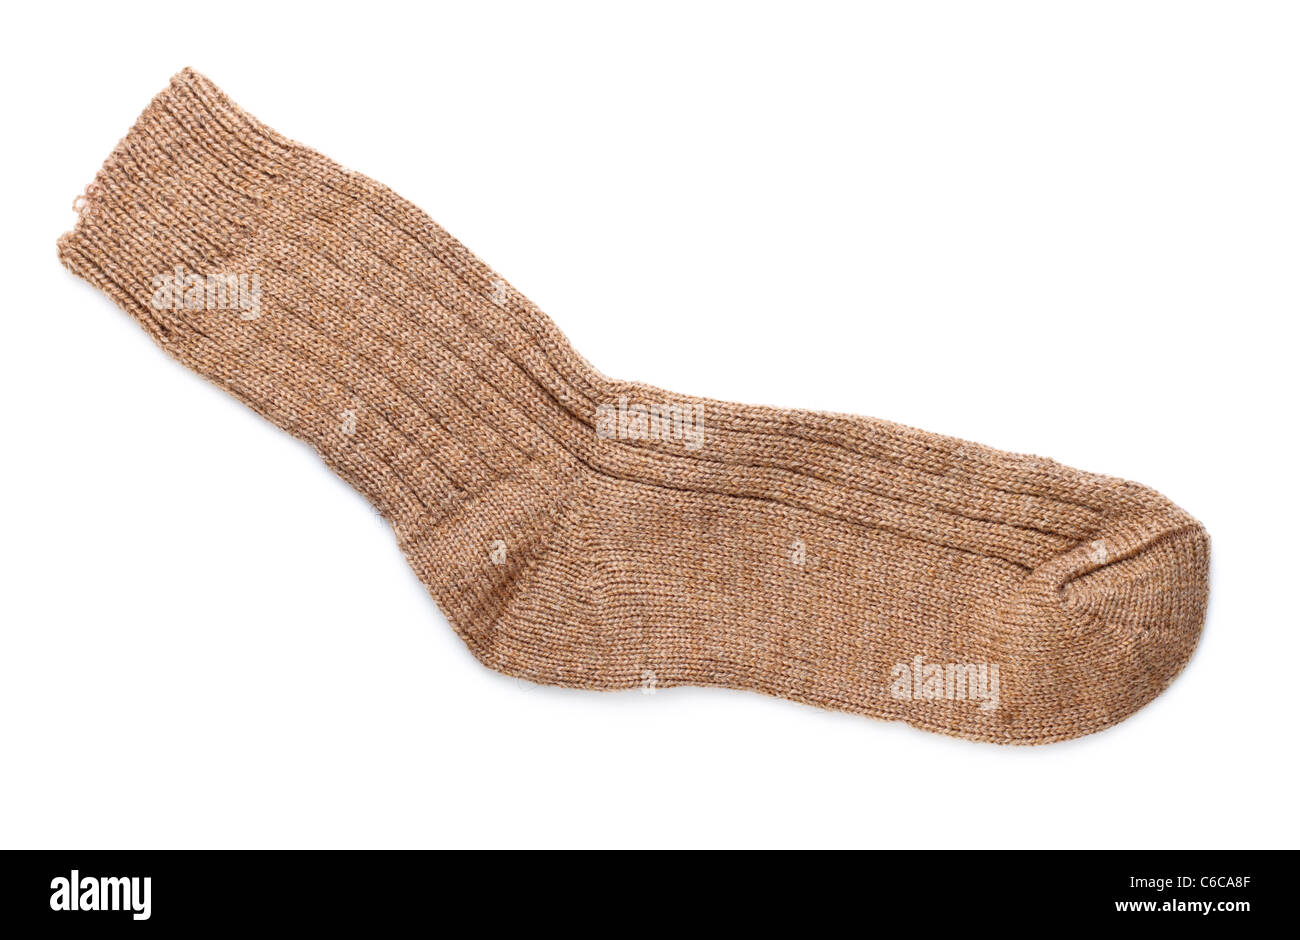 single woolen sock isolated on white background Stock Photo